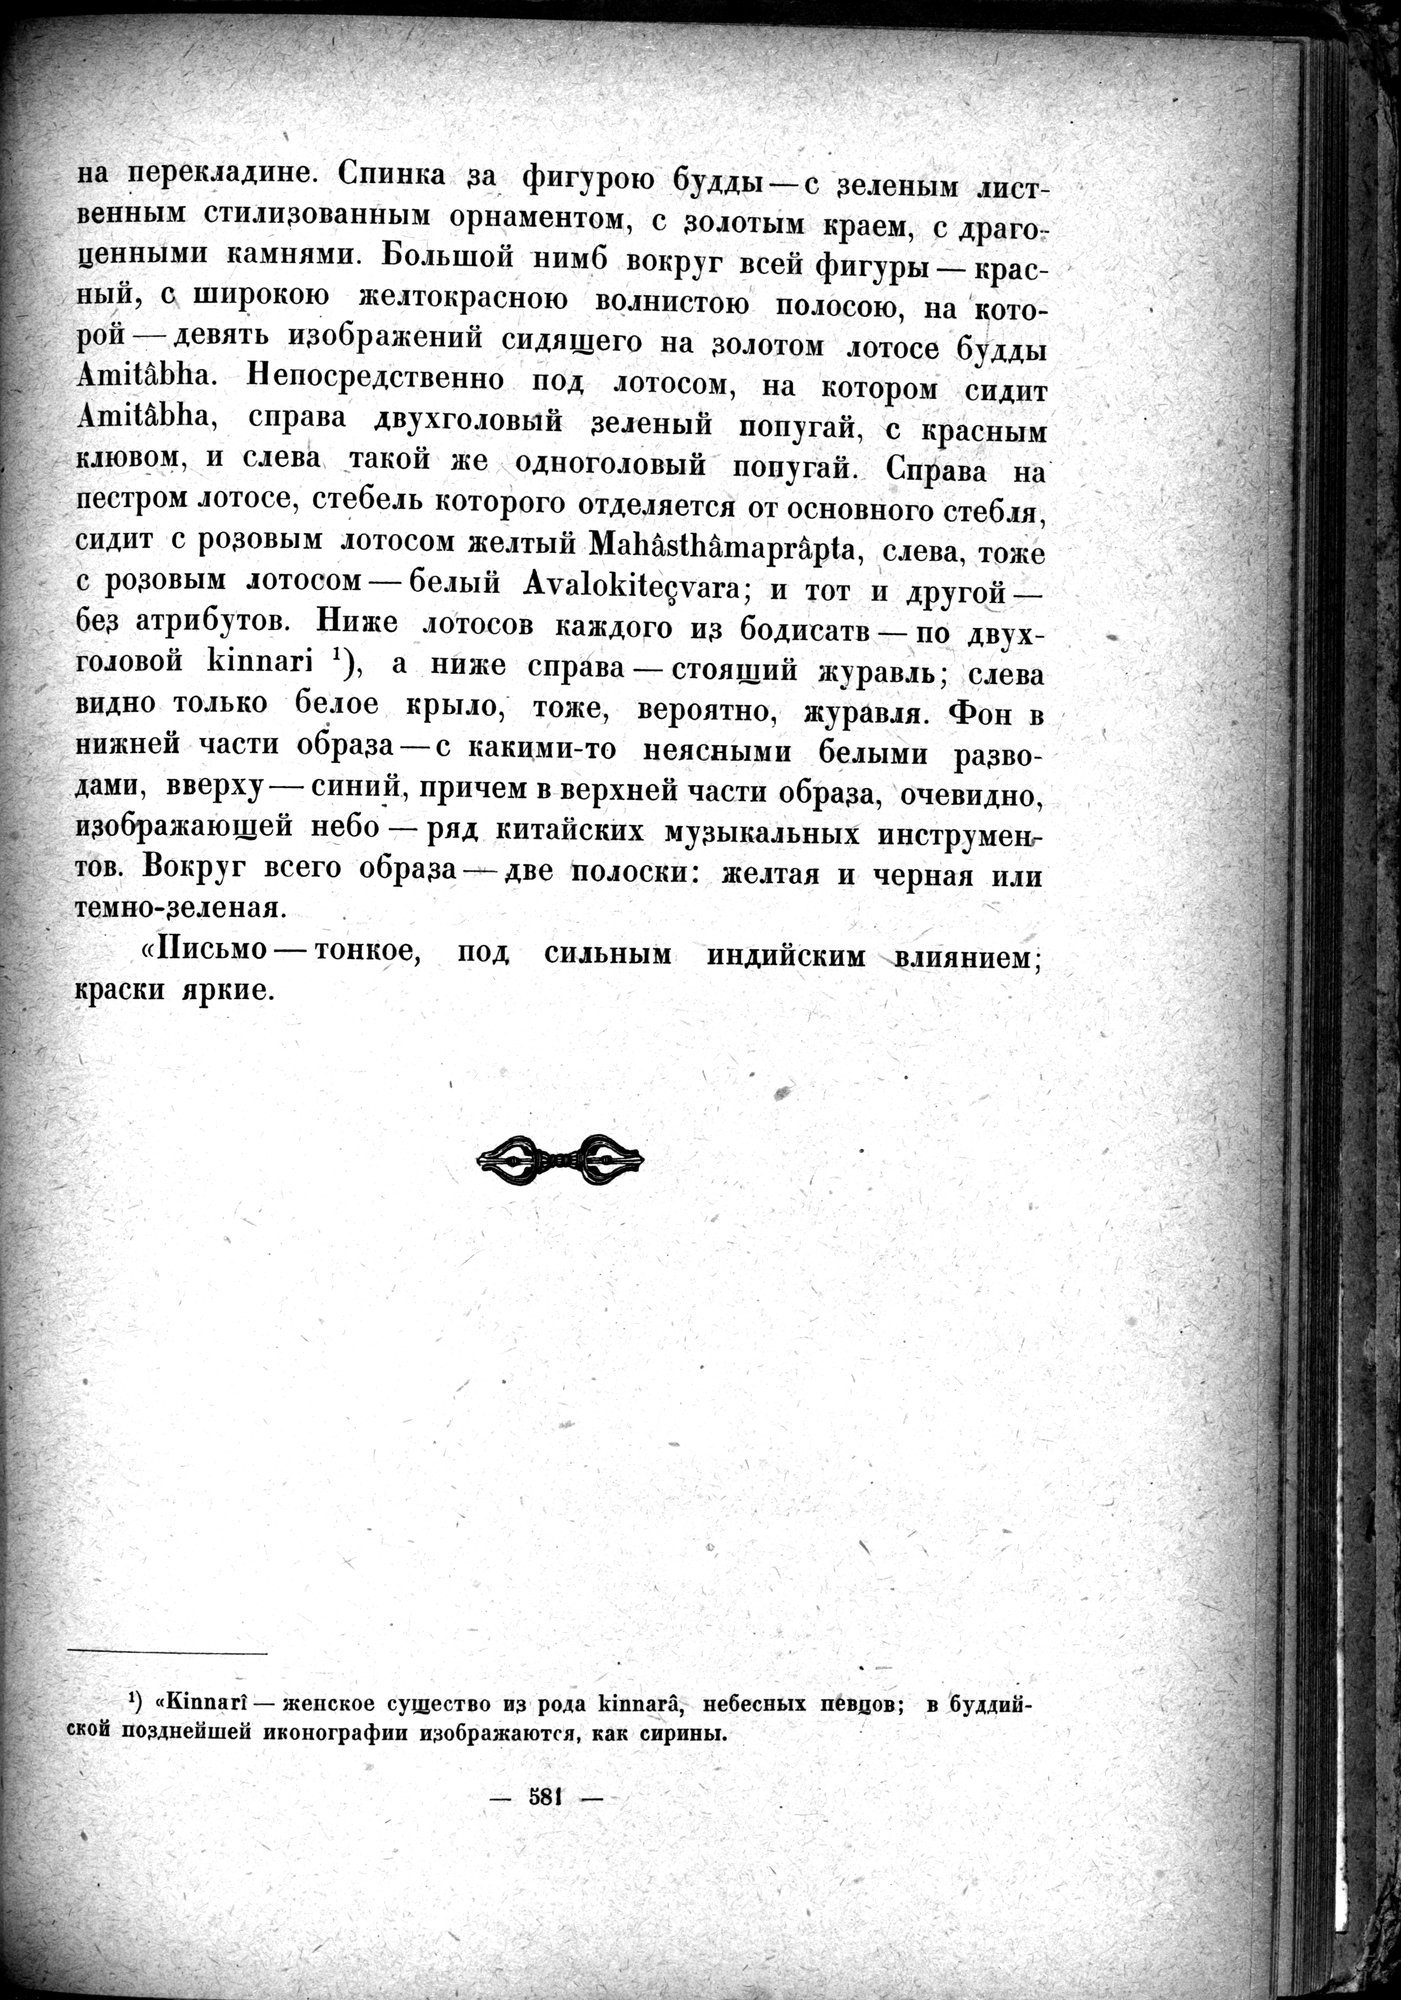 Mongoliya i Amdo i mertby gorod Khara-Khoto : vol.1 / Page 667 (Grayscale High Resolution Image)